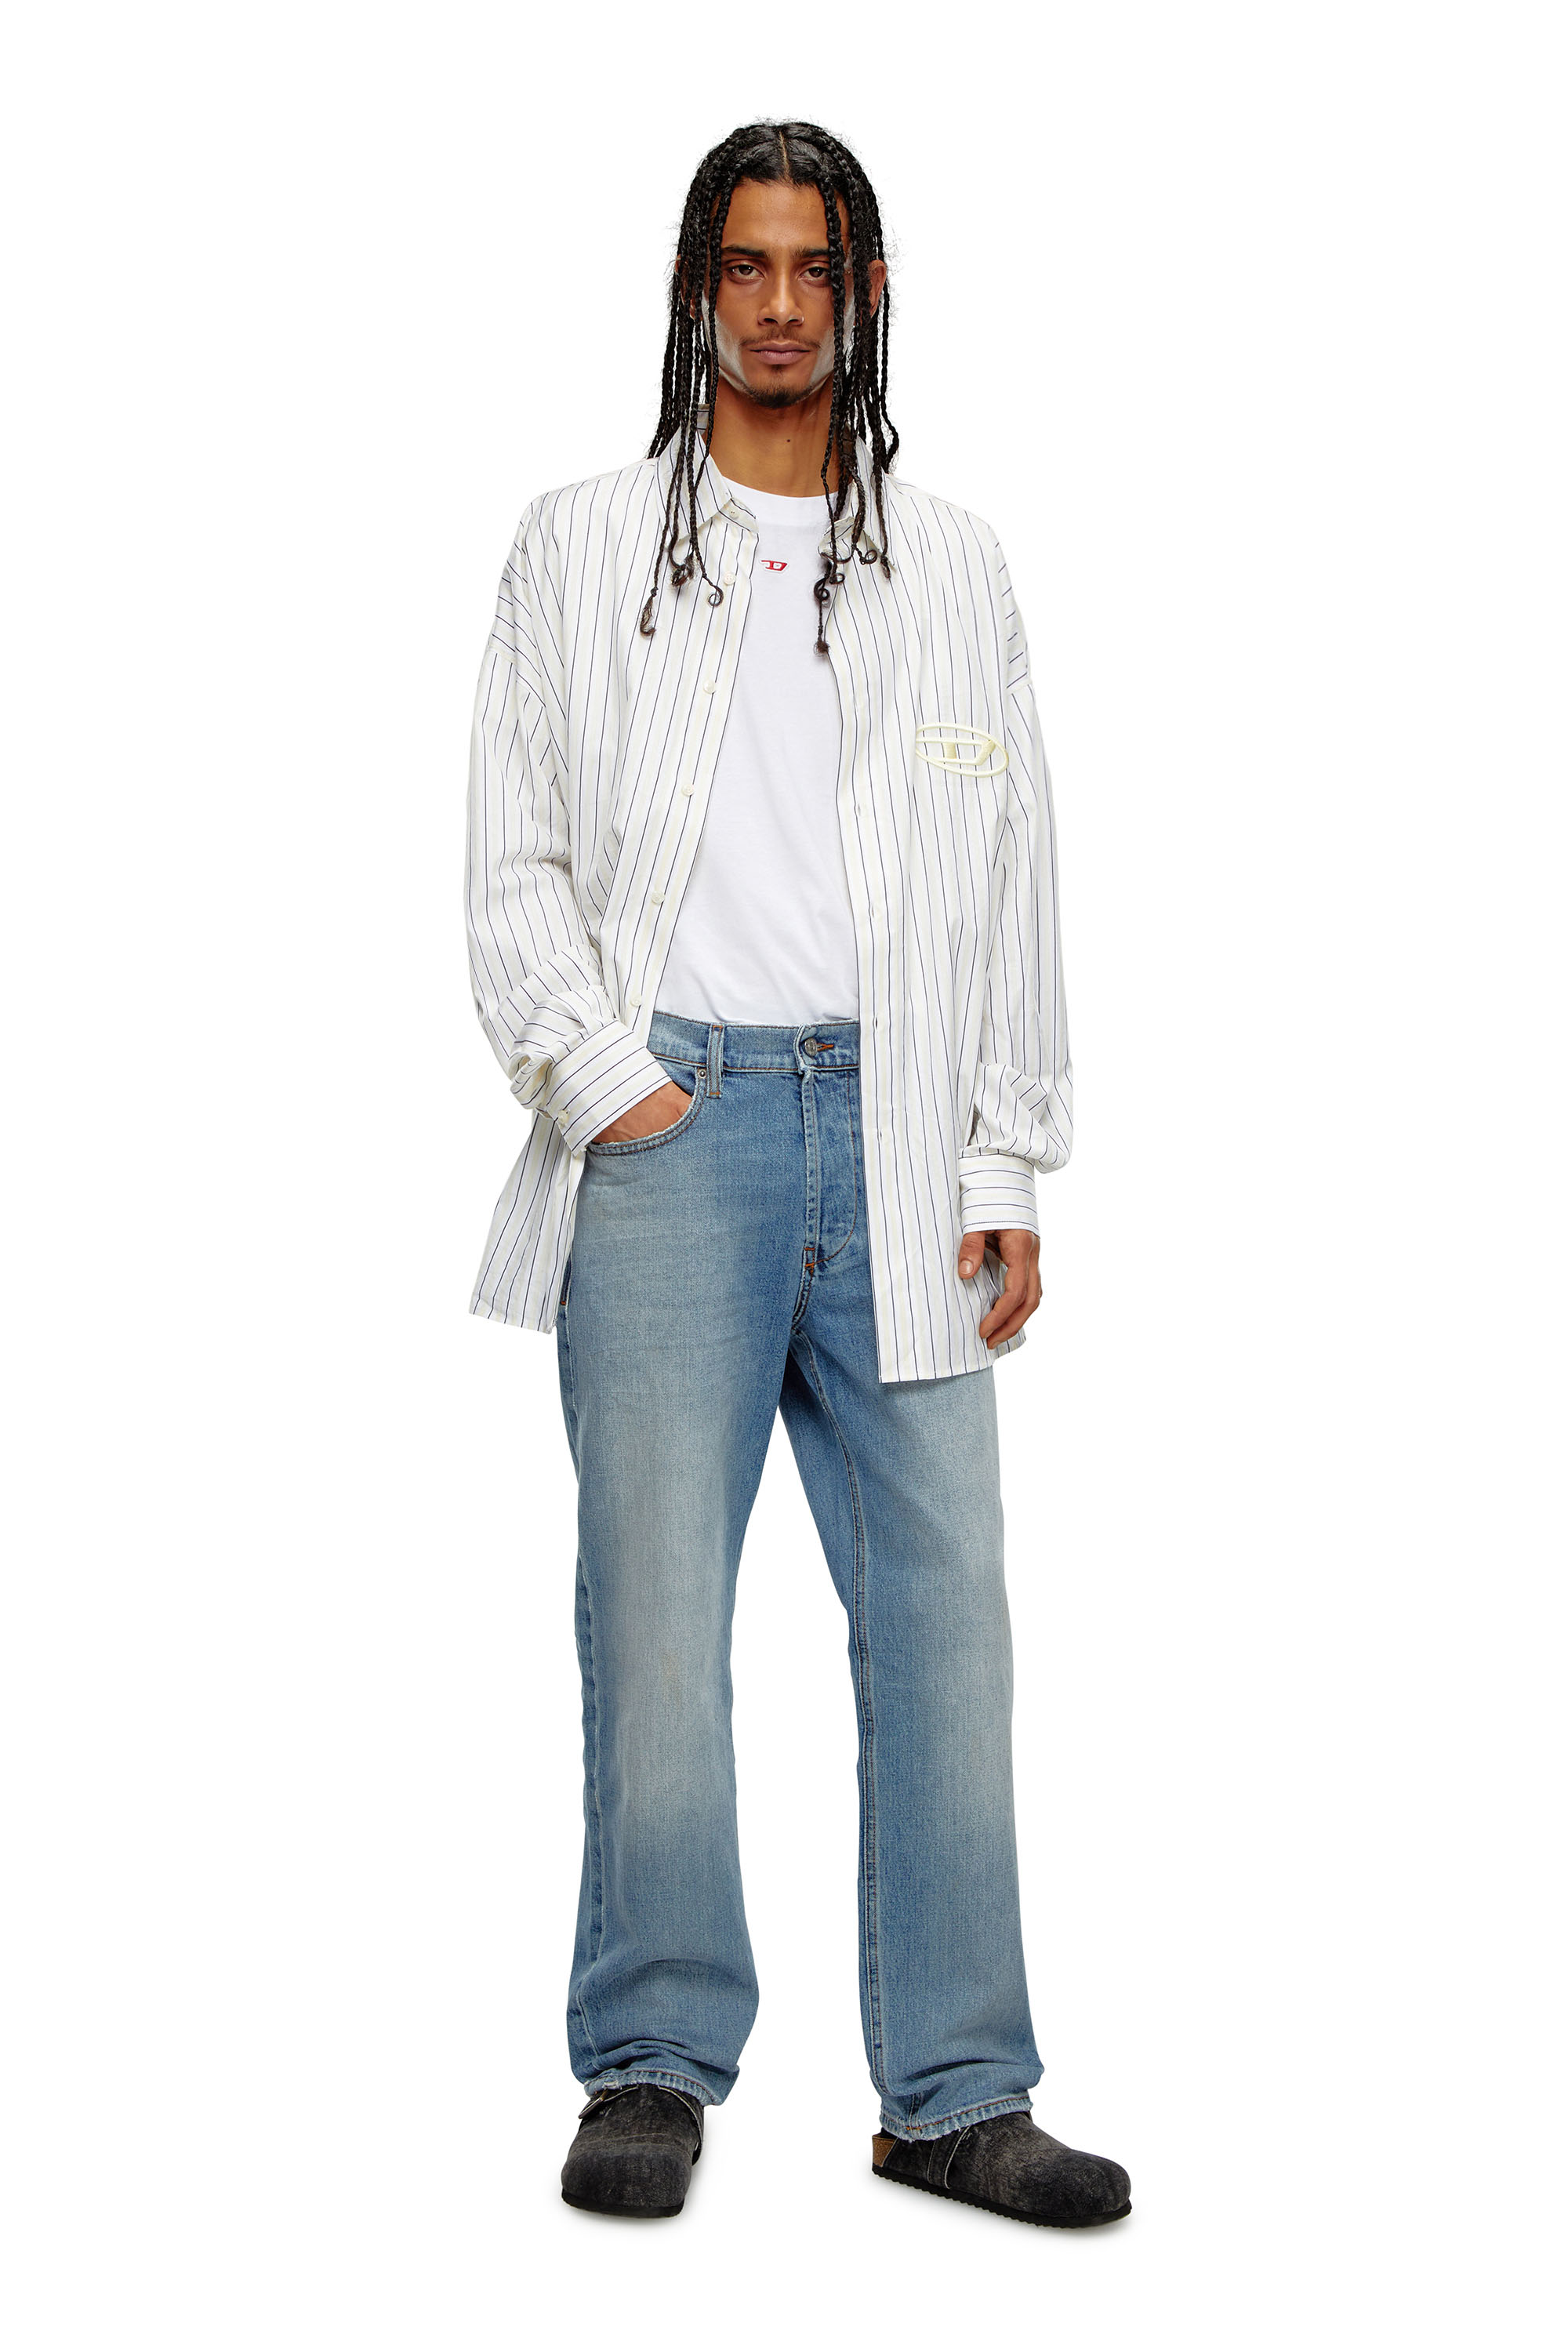 Men's New Denim: Jeans, Shirts, Bomber & Moto Jackets